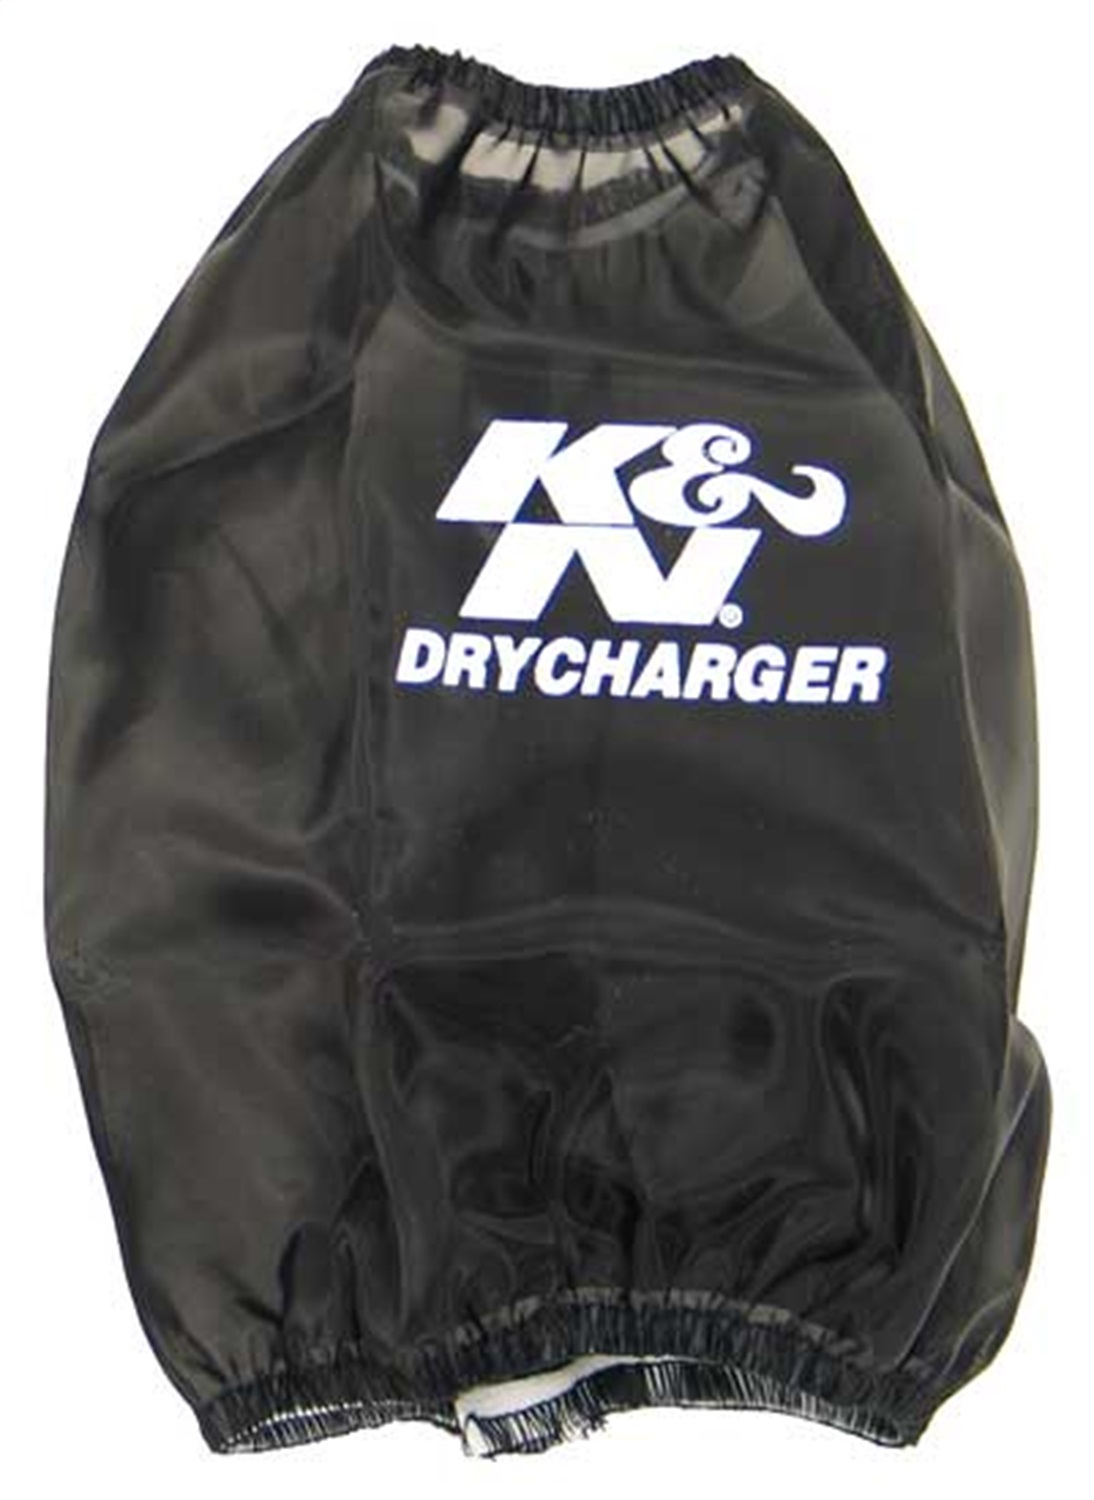 K&N Filters K&N Filters RC-4700DK DryCharger Filter Wrap